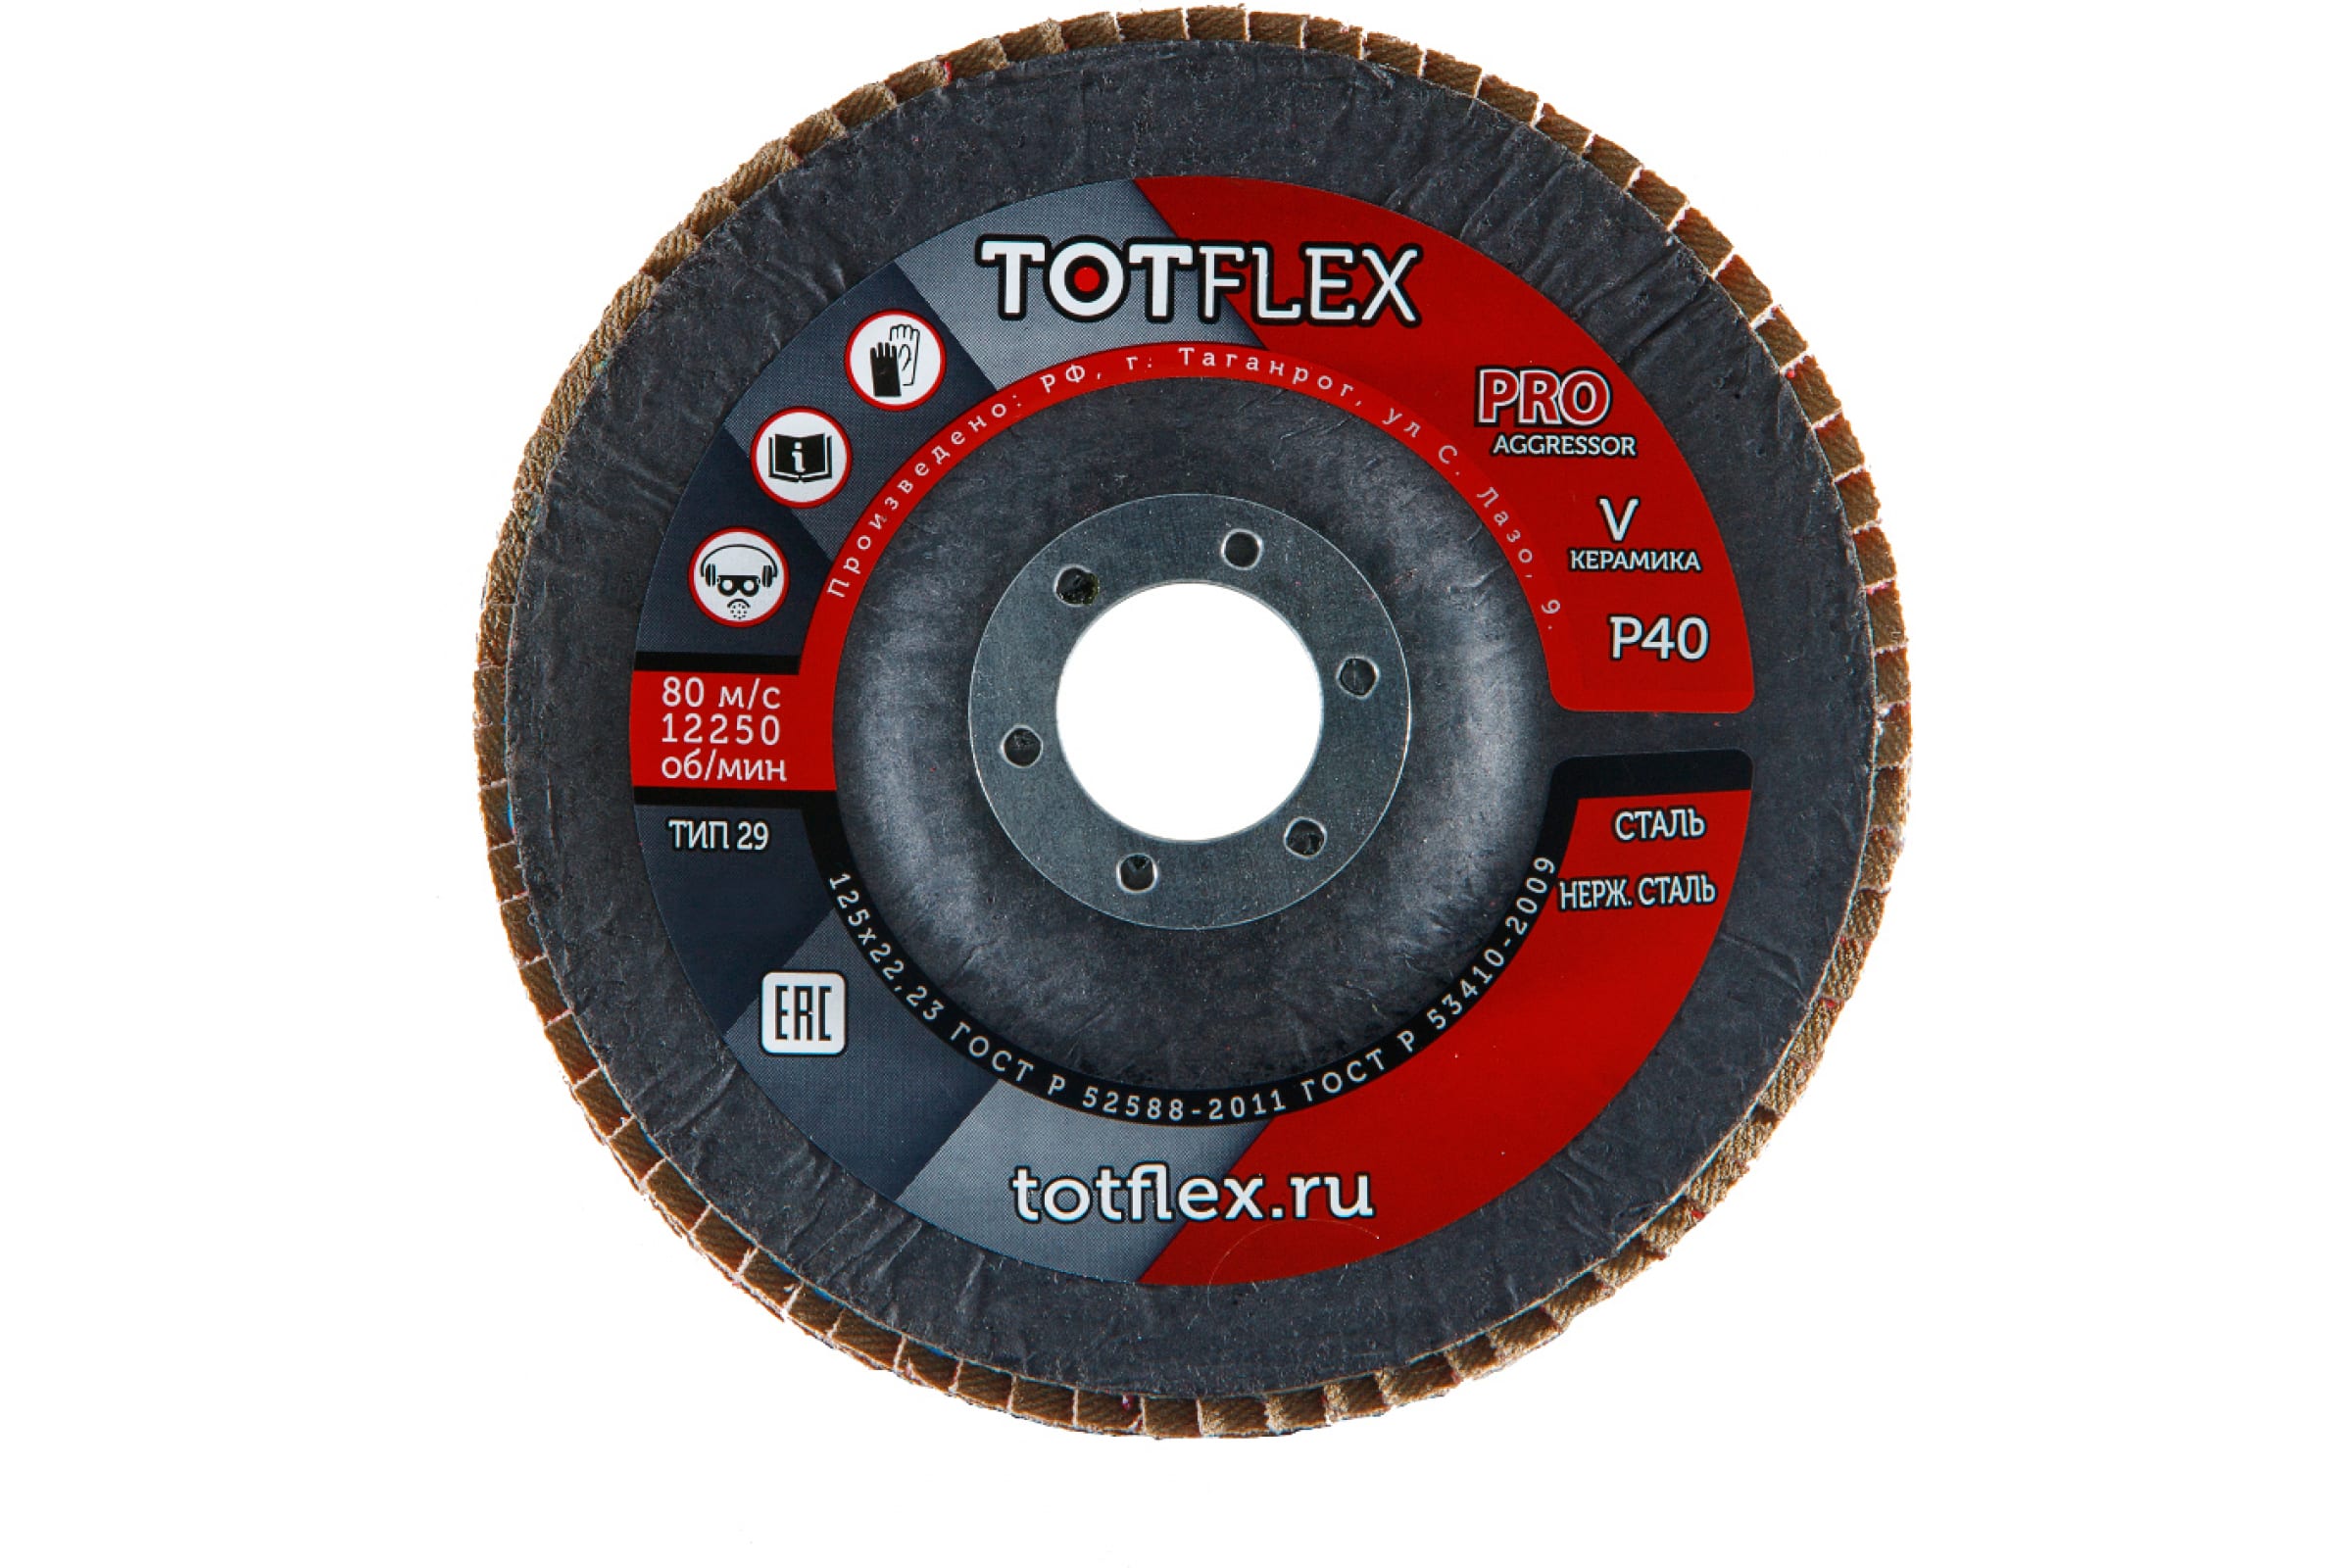 Totflex Круг лепестковый торцевой AGGRESSOR-PRO 2 125x22 V P40 4631148128248 круг лепестковый торцевой курс 39916 125 мм p 120